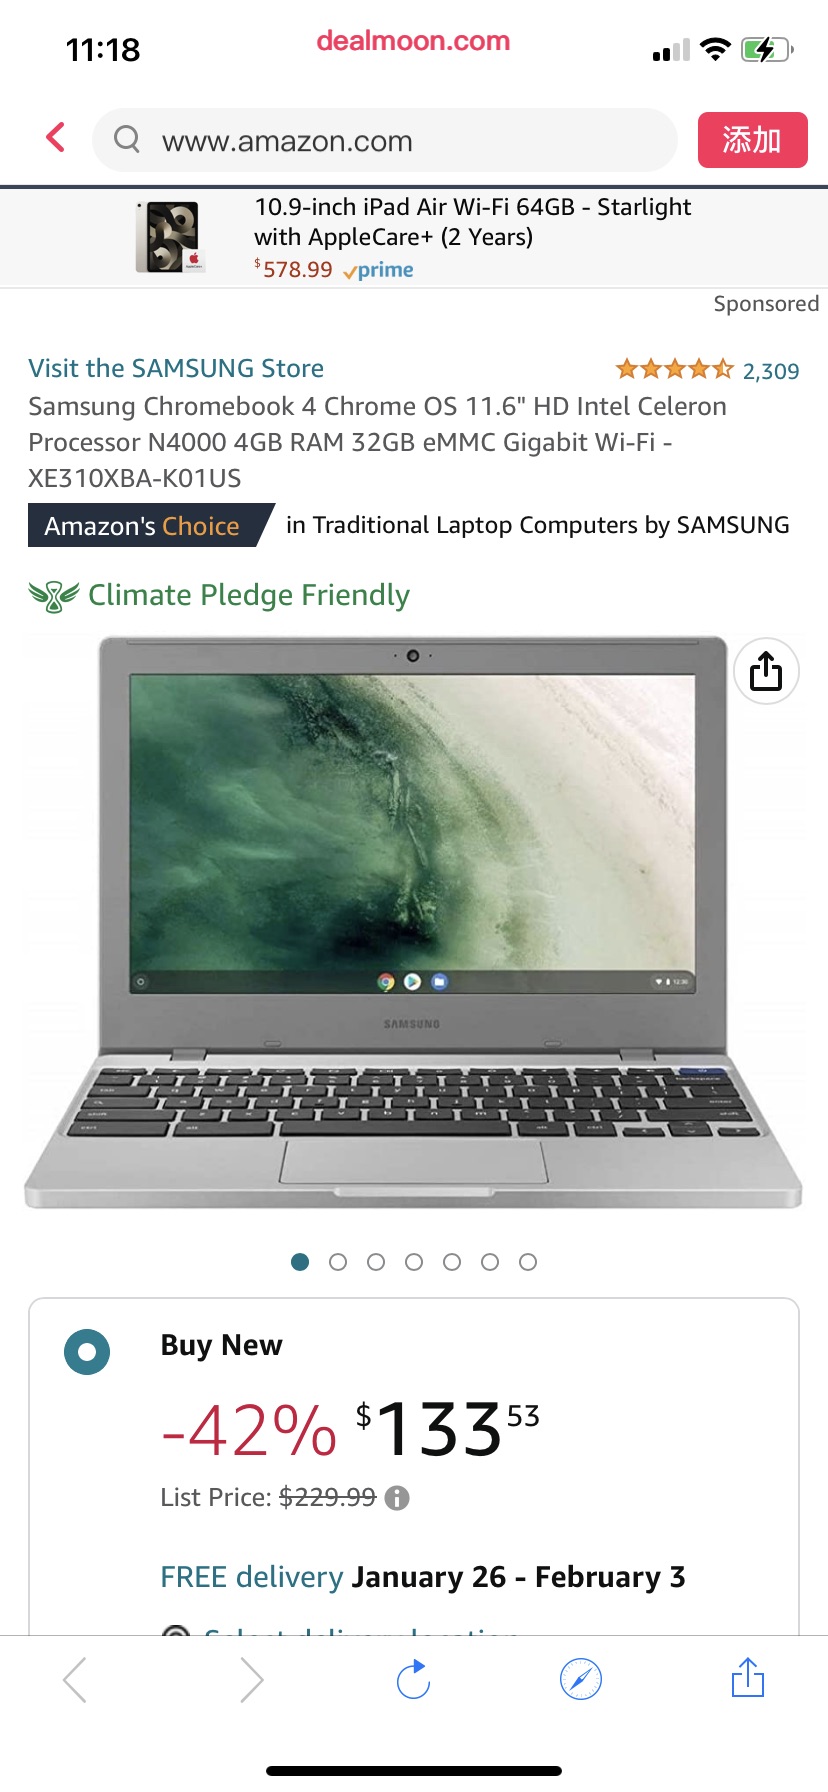 Amazon.com: Samsung Chromebook 4 Chrome OS 11.6" HD Intel Celeron Processor N4000 4GB RAM 32GB eMMC Gigabit Wi-Fi - XE310XBA-K01US : 三星笔记本电脑